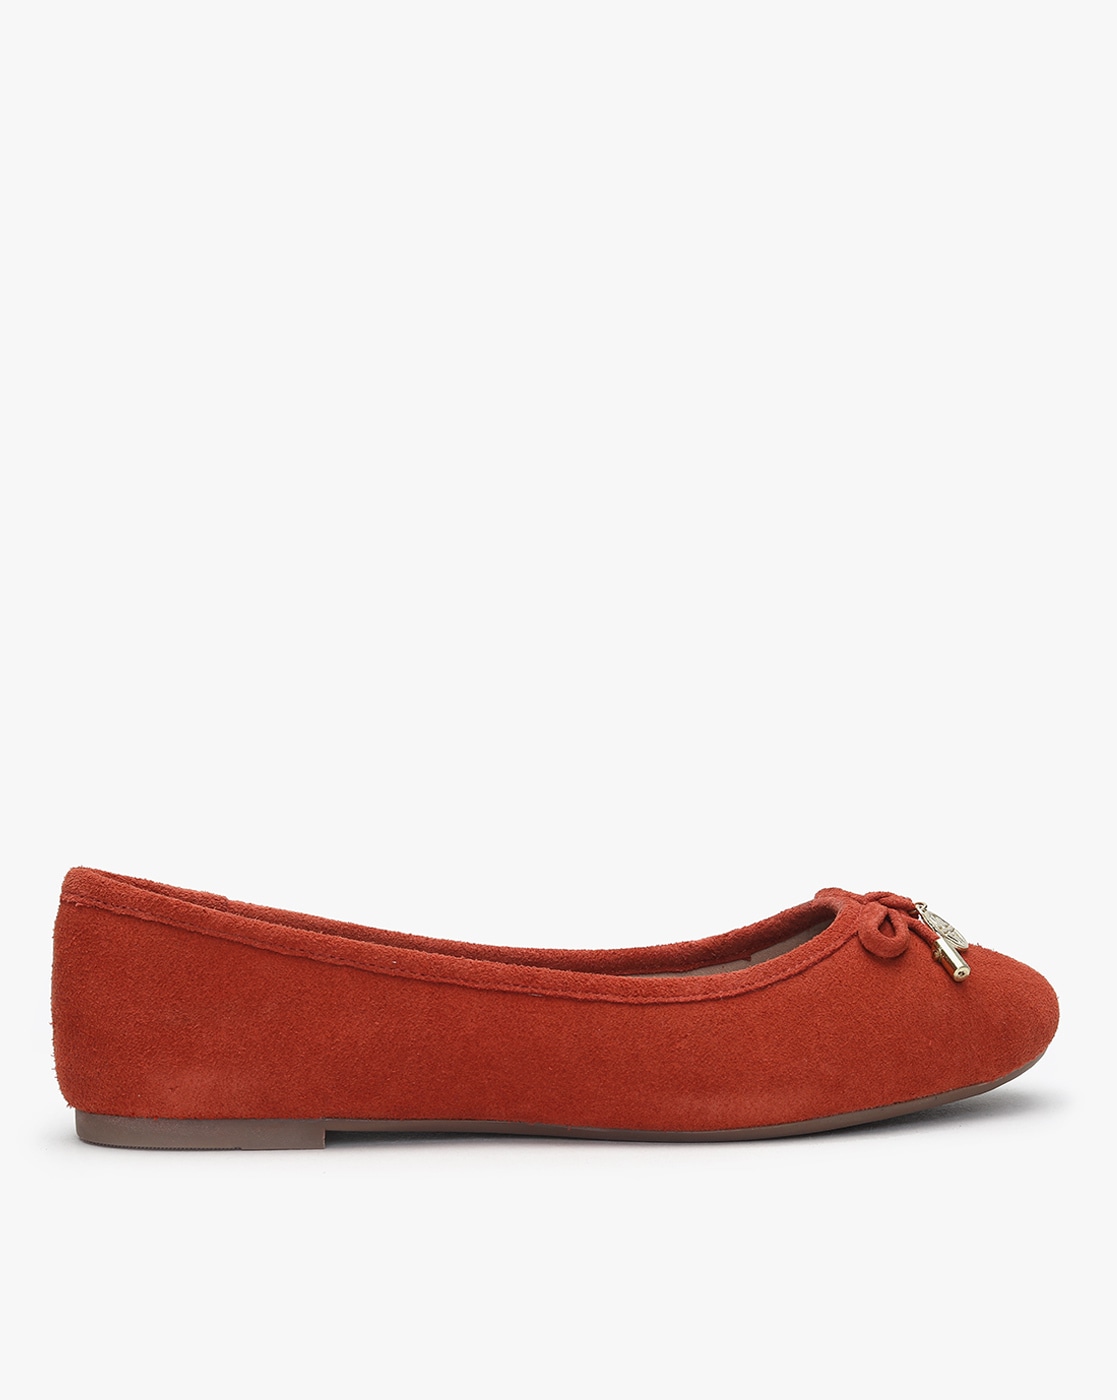 orange flat shoes for women